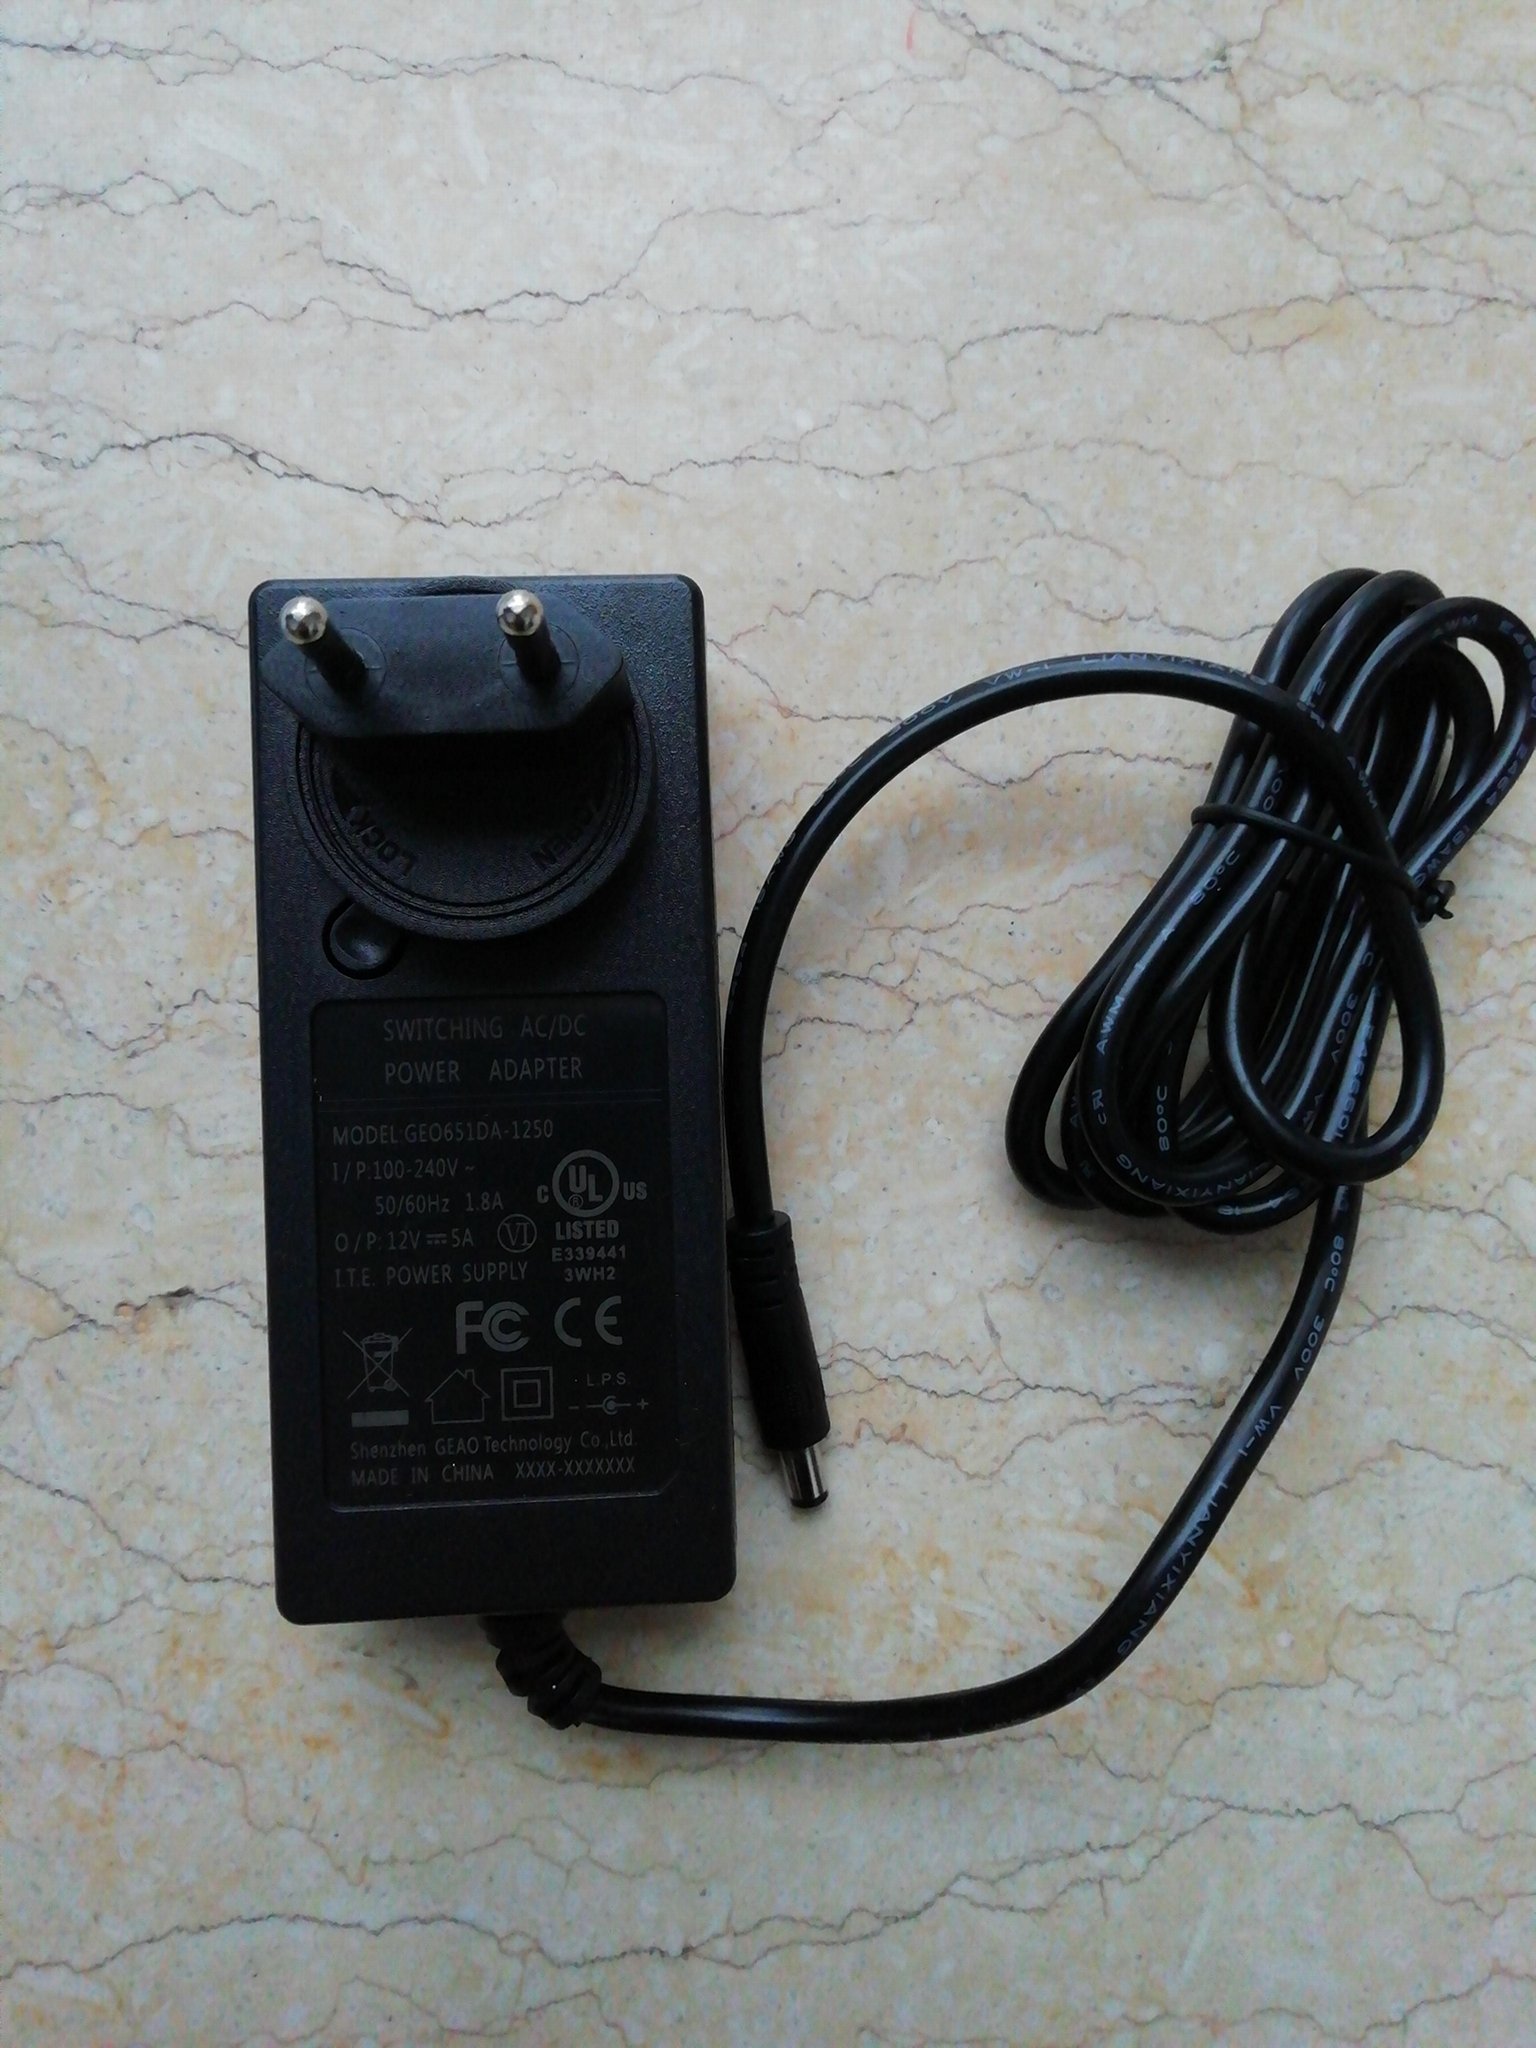 SELL 12V5A EU power adapter GEO651DA-1250